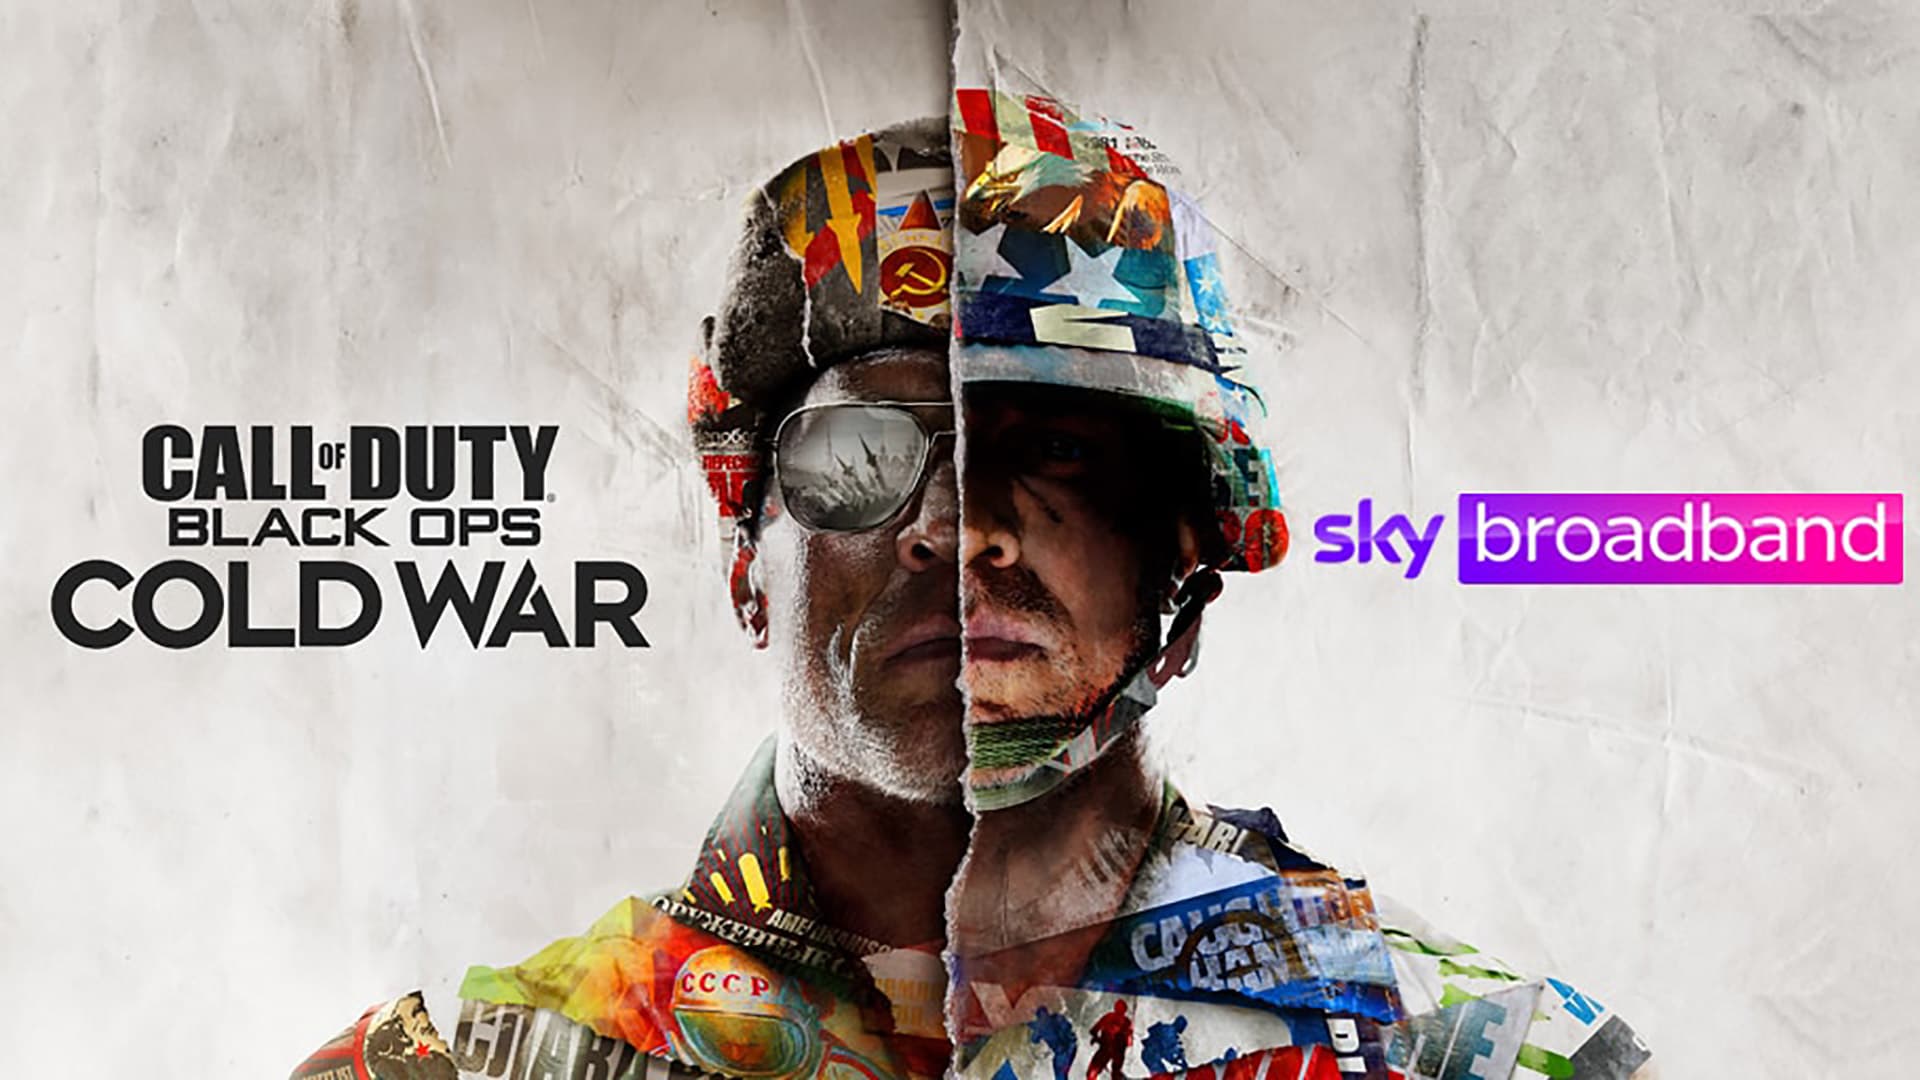 Call Of Duty Cold War Sky Broadband poster